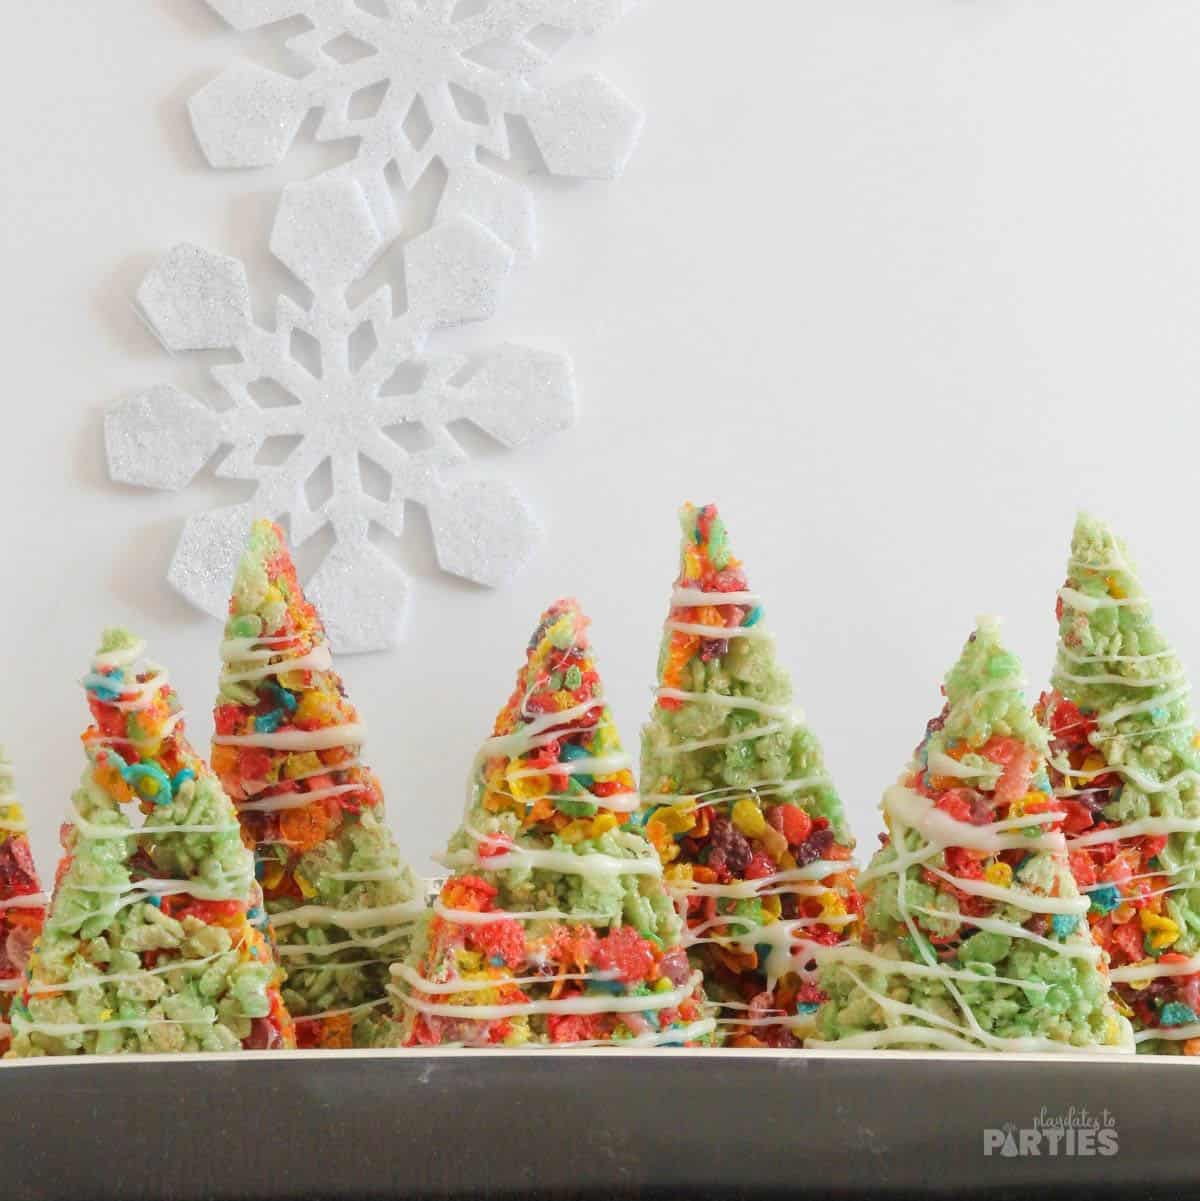 Colorful Rice Krispie Treats shaped like Christmas Trees.